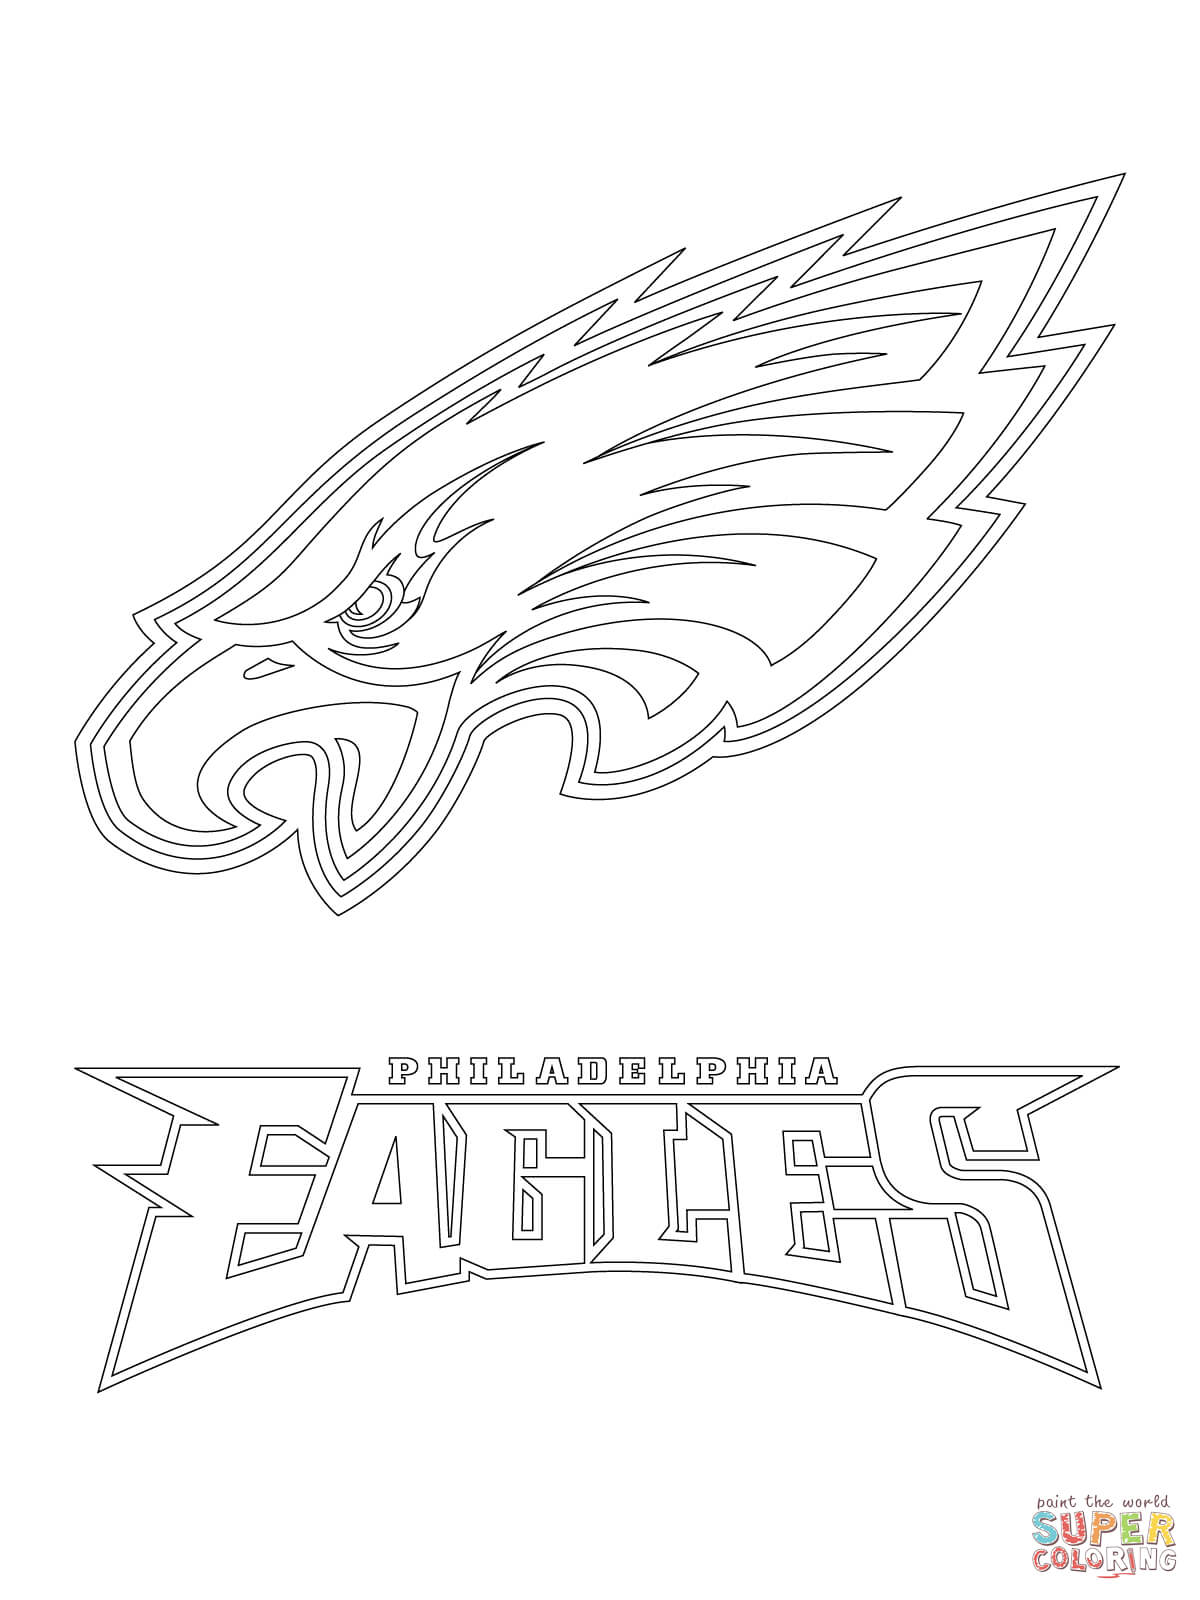 Black and White Eagle Football Logo - Philadelphia Eagles Logo coloring page | Free Printable Coloring Pages